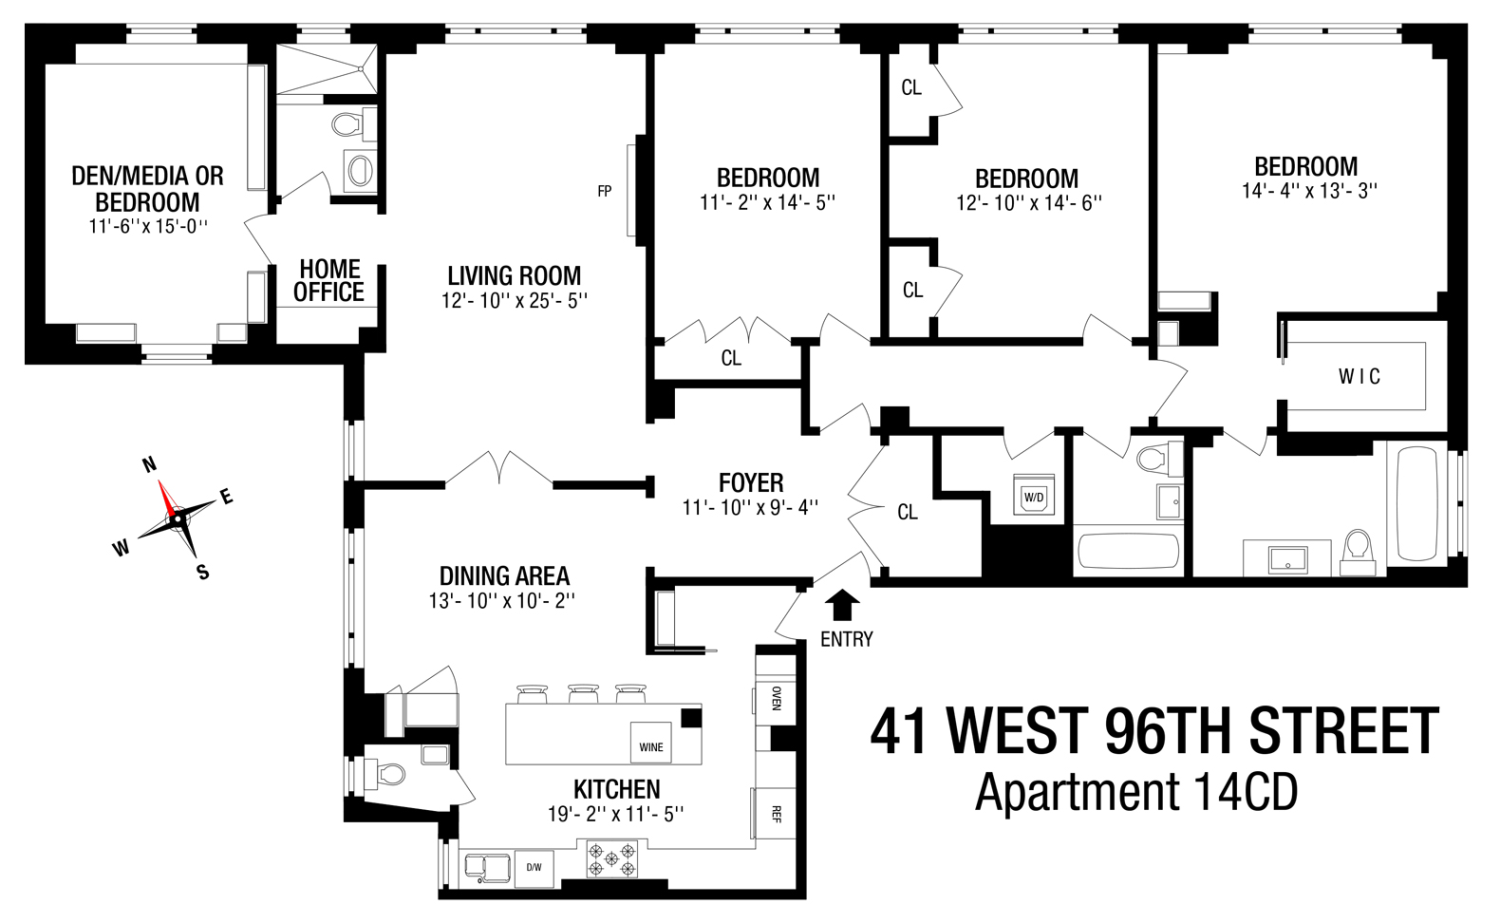 Floorplan for 41 West 96th Street, 14CD